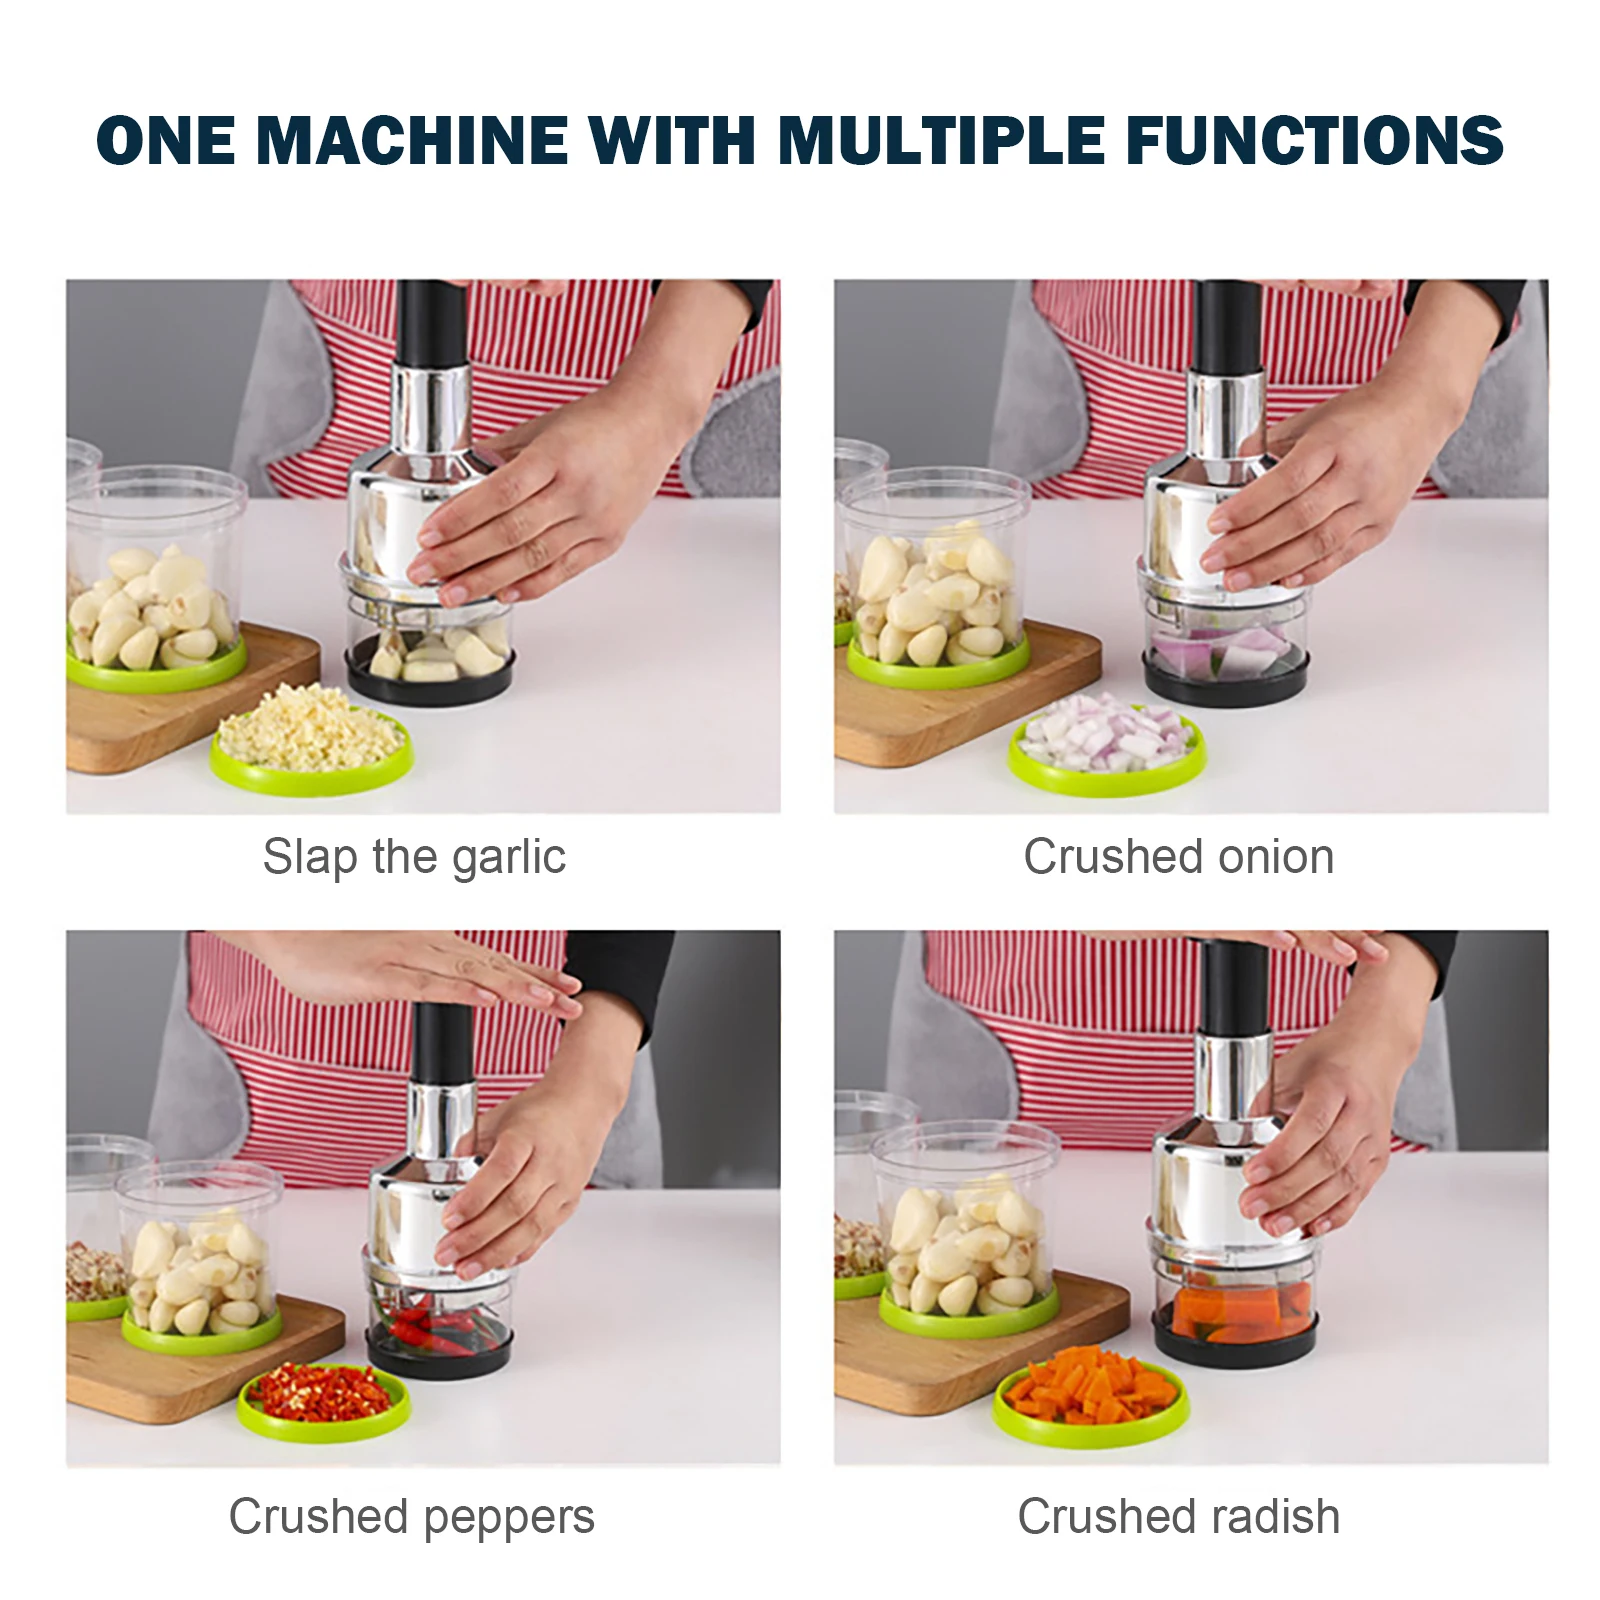 https://ae01.alicdn.com/kf/Sea87e2c2a3424b609ed5c06a2765fdd8e/Kitchen-Manual-Food-Chopper-Handheld-Slap-Press-Chopper-Mincer-for-Onions-Garlic-Nuts-Efficient-Garlic-Onion.jpg